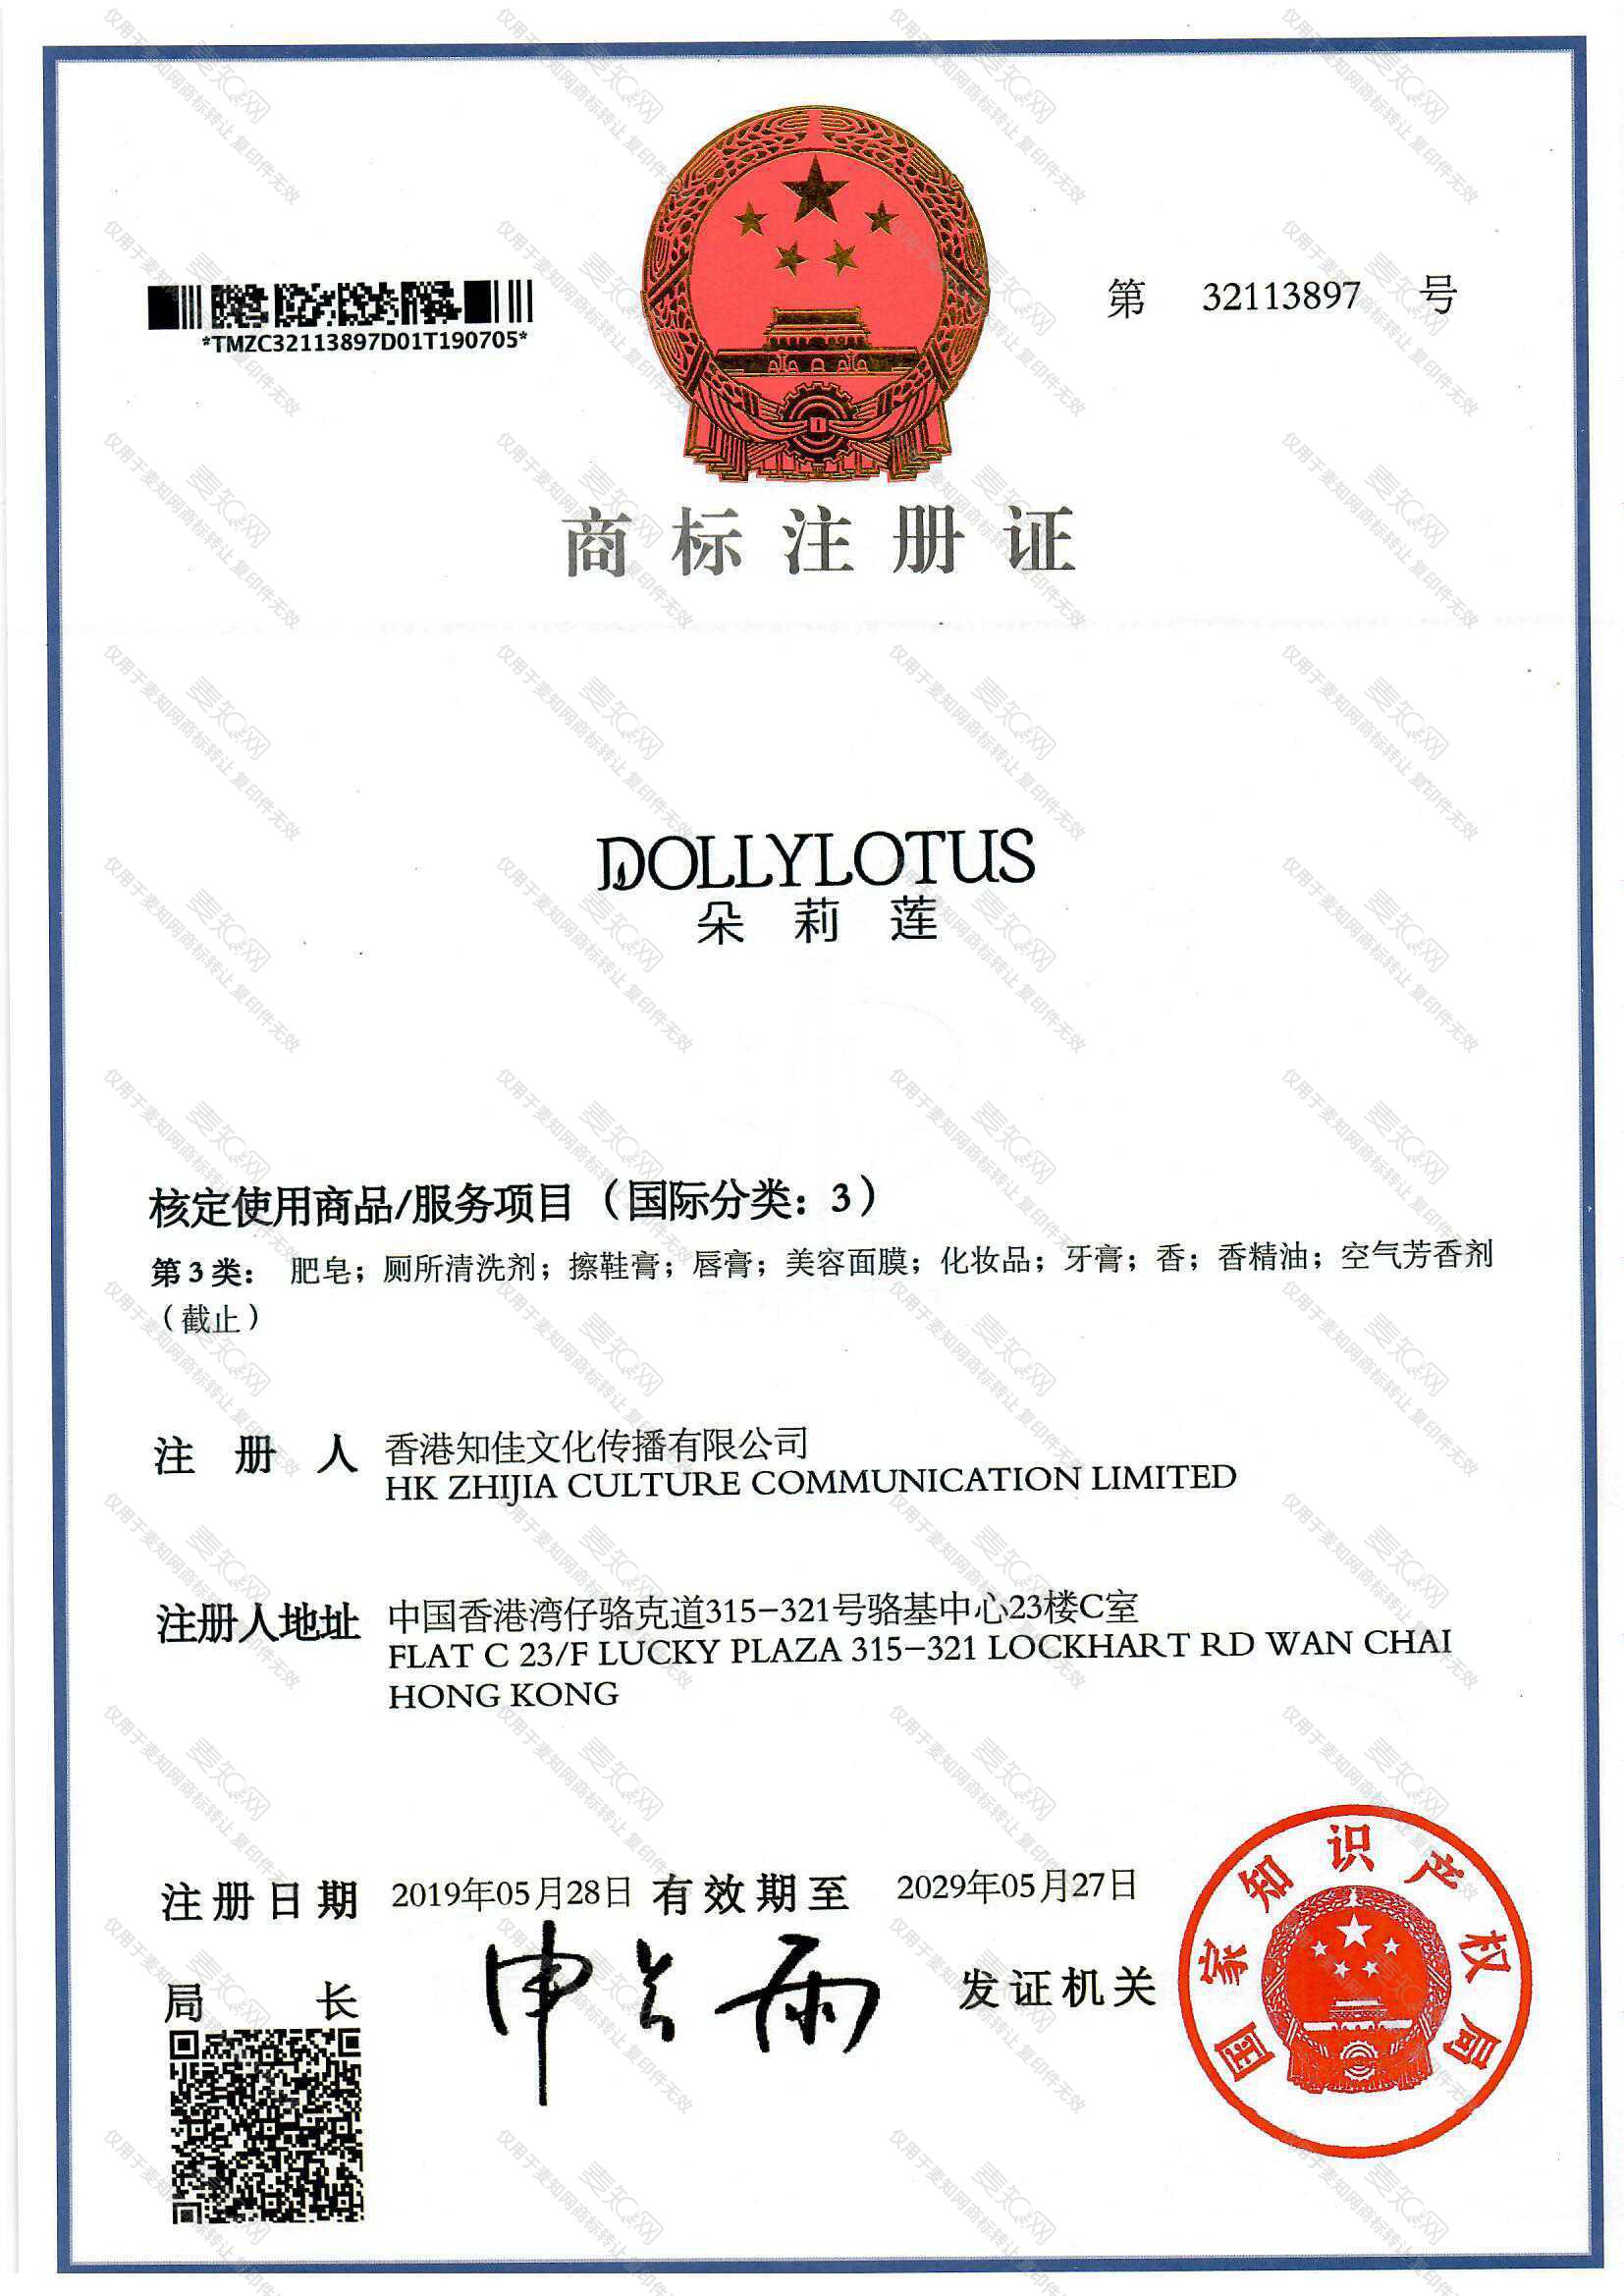 朵莉莲 DOLLYLOTUS注册证